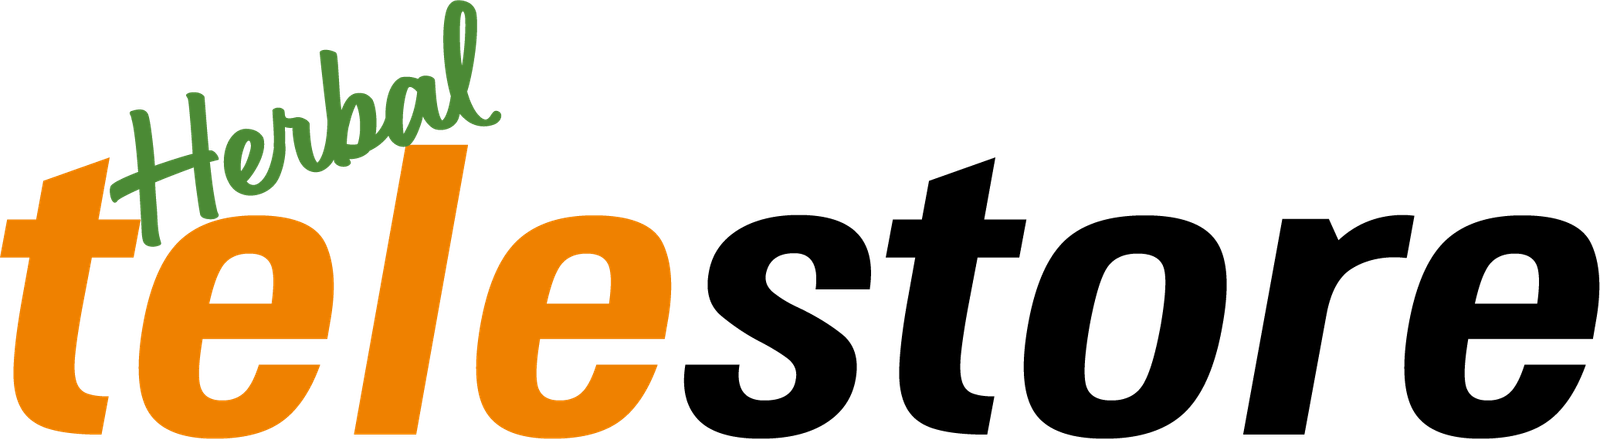 herbaltelestore logo